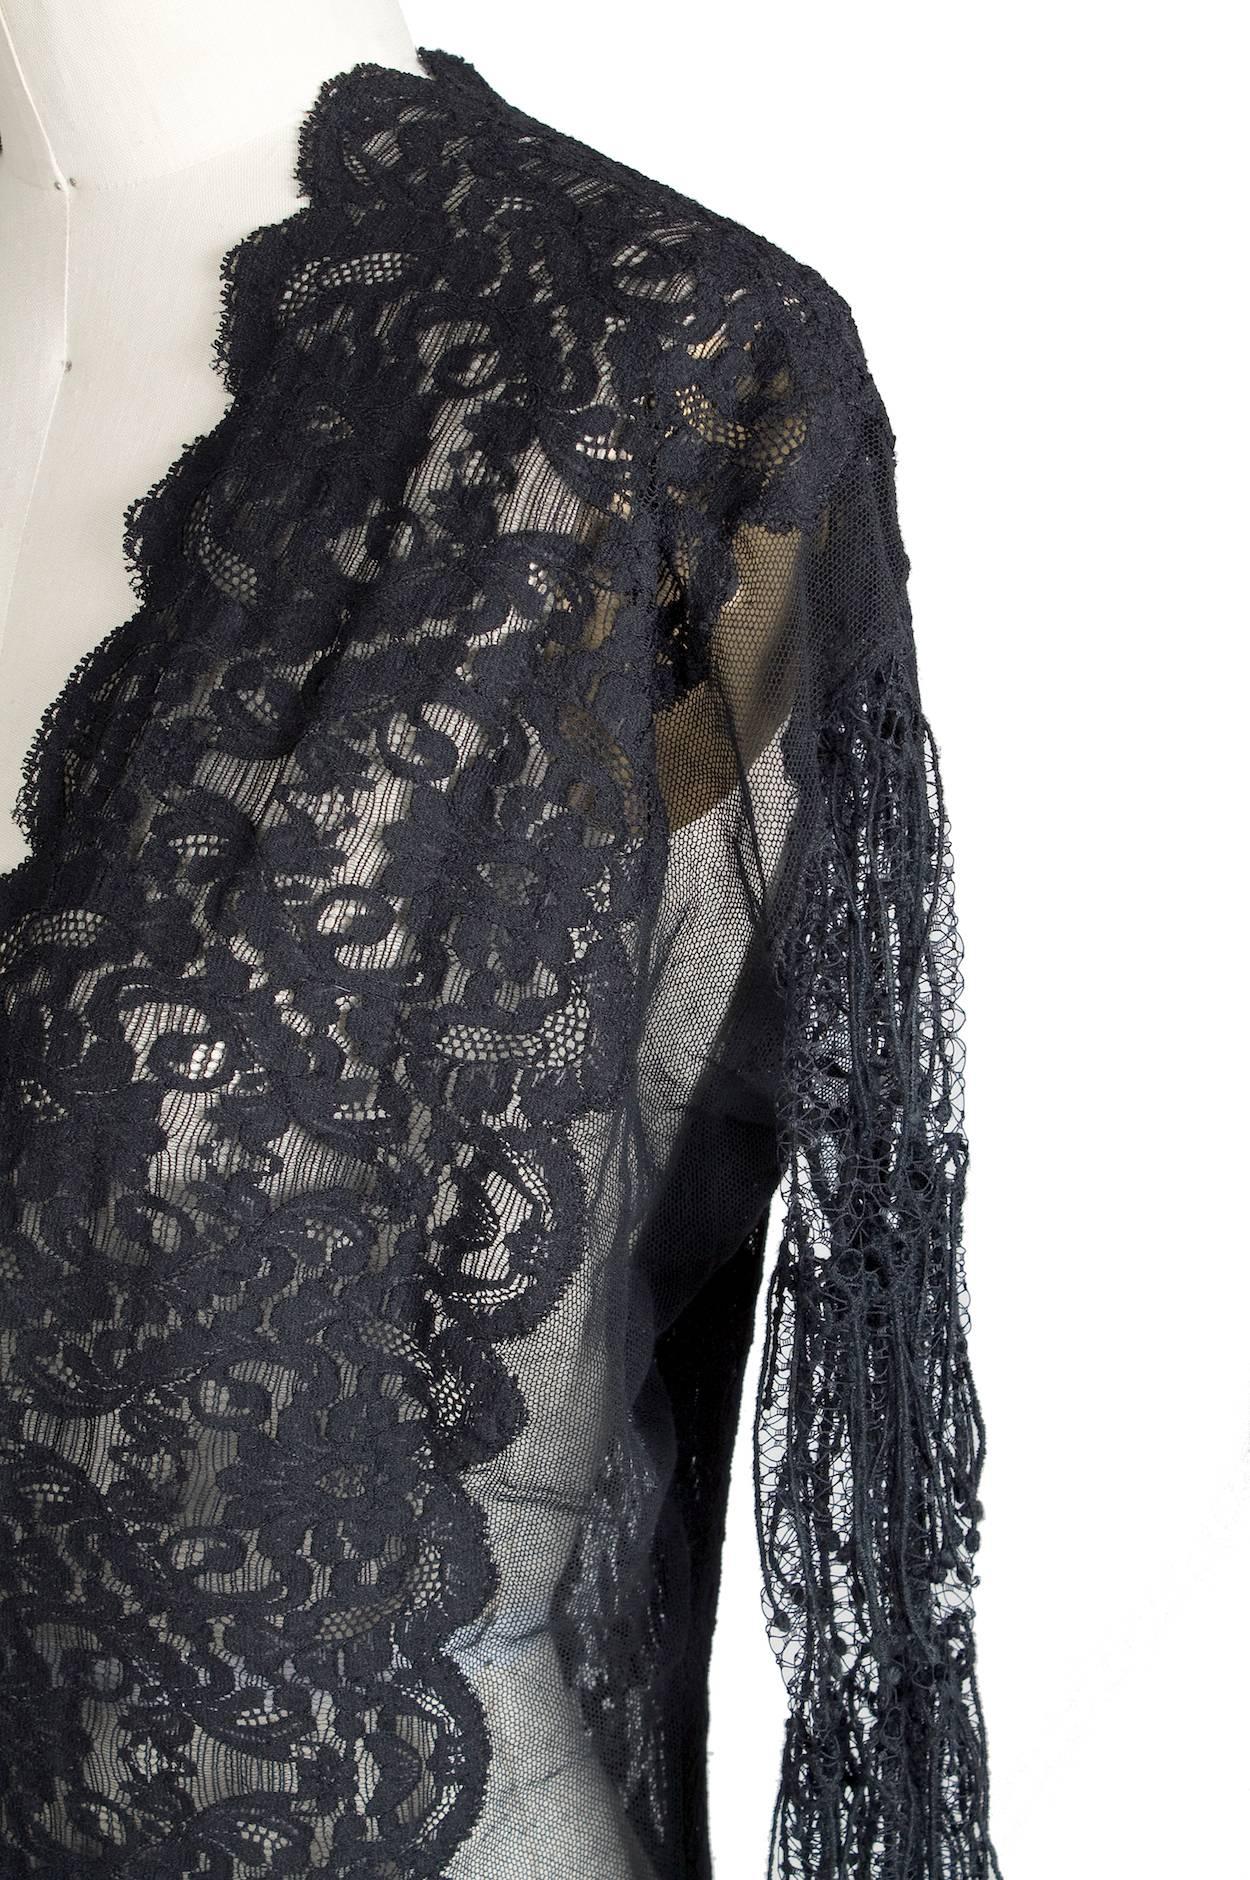 Black Jean Paul Gaultier Long Sleeve Lace Dress circa 1990s